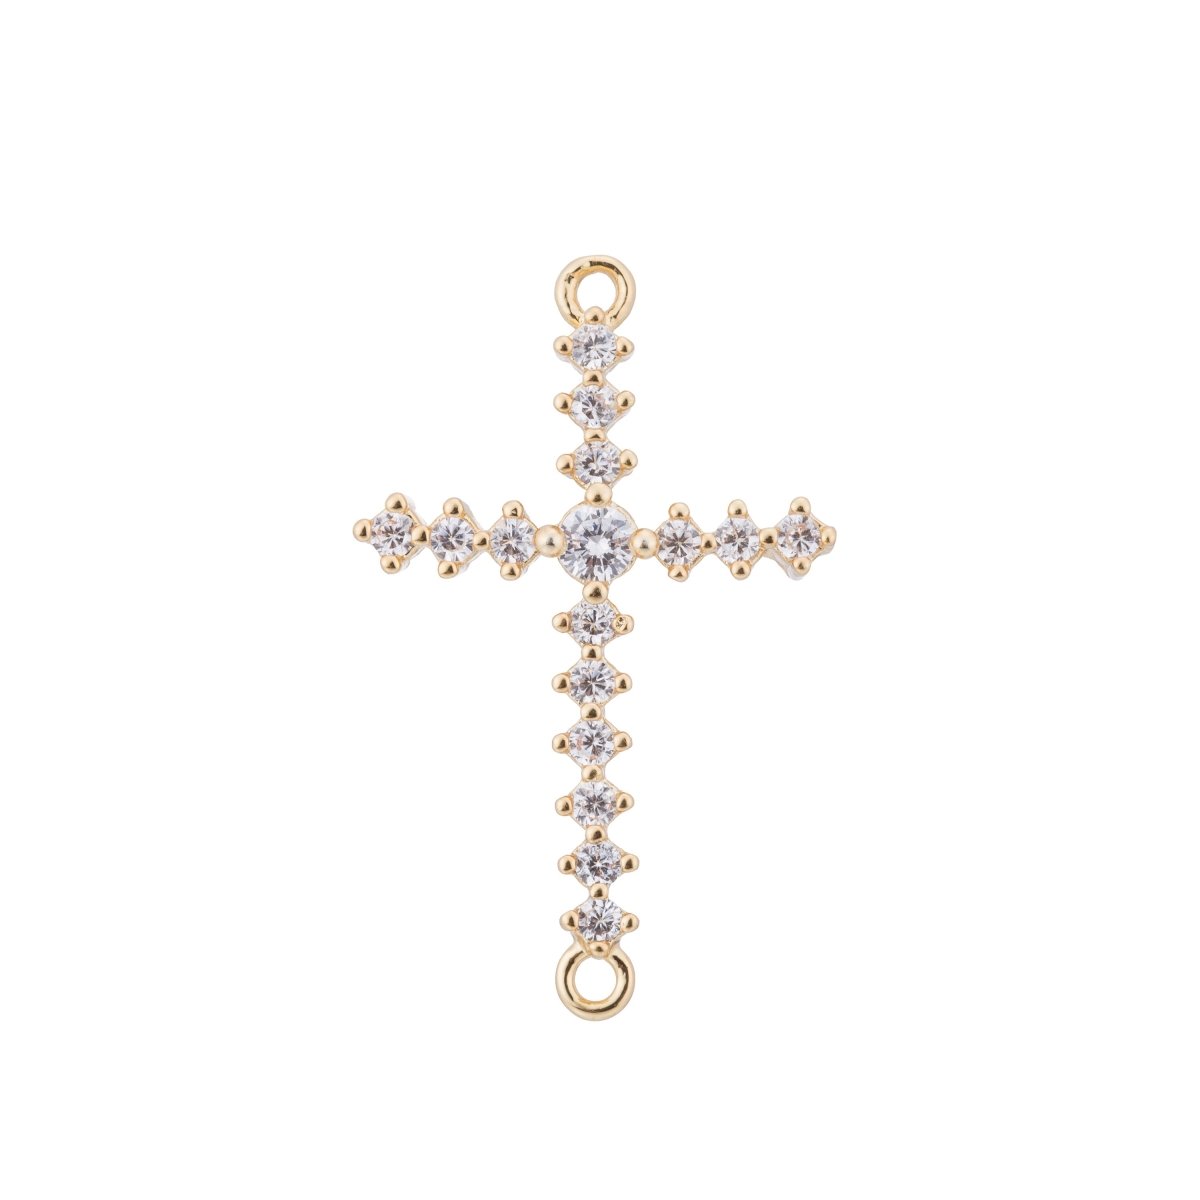 Golden Cross Charm, Believe Bracelet, Cross Charm Bracelet, Peace Faith Cubic Zirconia Bracelet Charm Bead Connector for Jewelry Making F-106 - DLUXCA